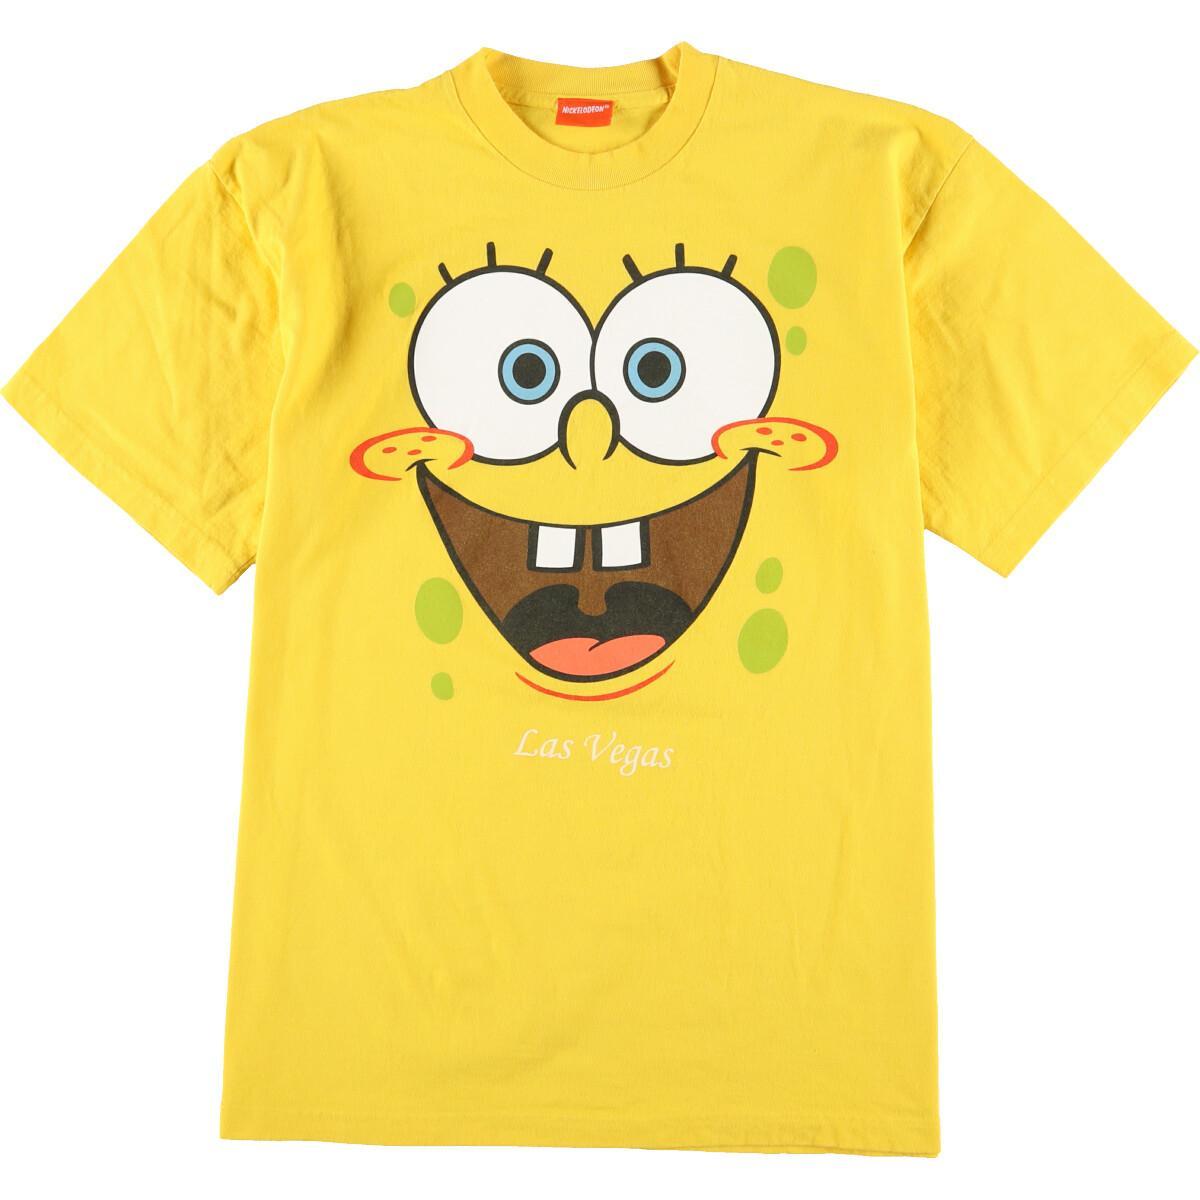 Nickelodeon Sponge Bob スポンジボブ キャラクタープリントtシャツ レディースxl Eaa 0524 Ss09 Js10 Ss12 Kf12 Ss2101 Cs2101 キャラクターtシャツ 古着屋jam ジャム